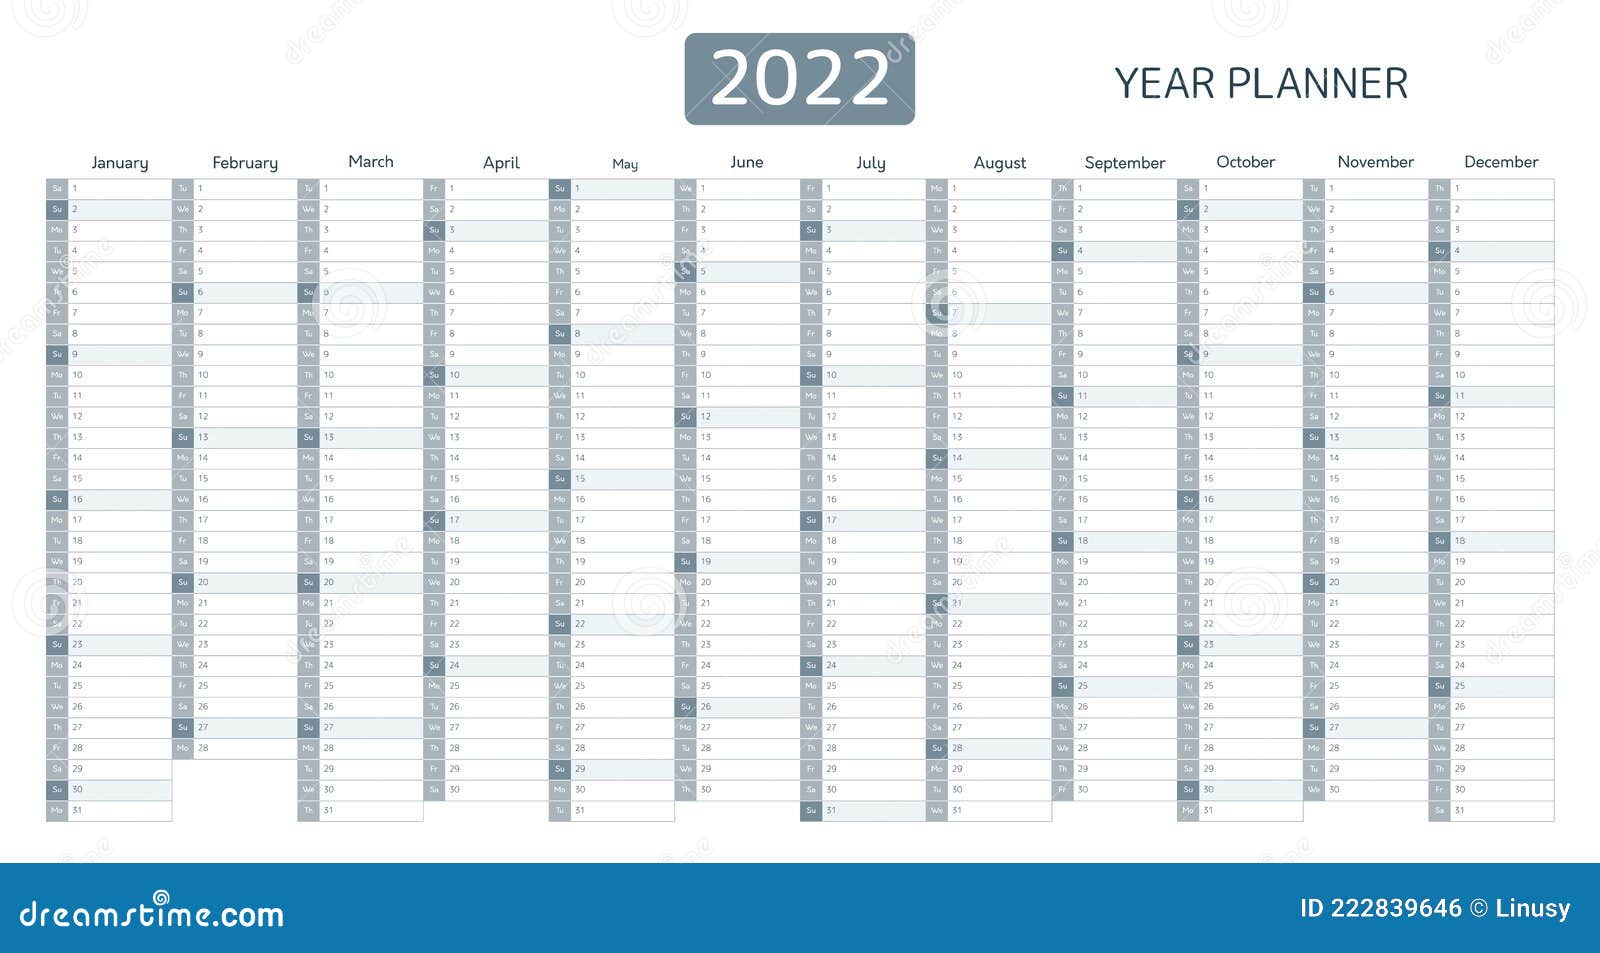 1 year plan. Блок планер на 2022 год. Годовой планер на 2022 год. Планировщик на год 2022. Календарь планер на 2022 год.